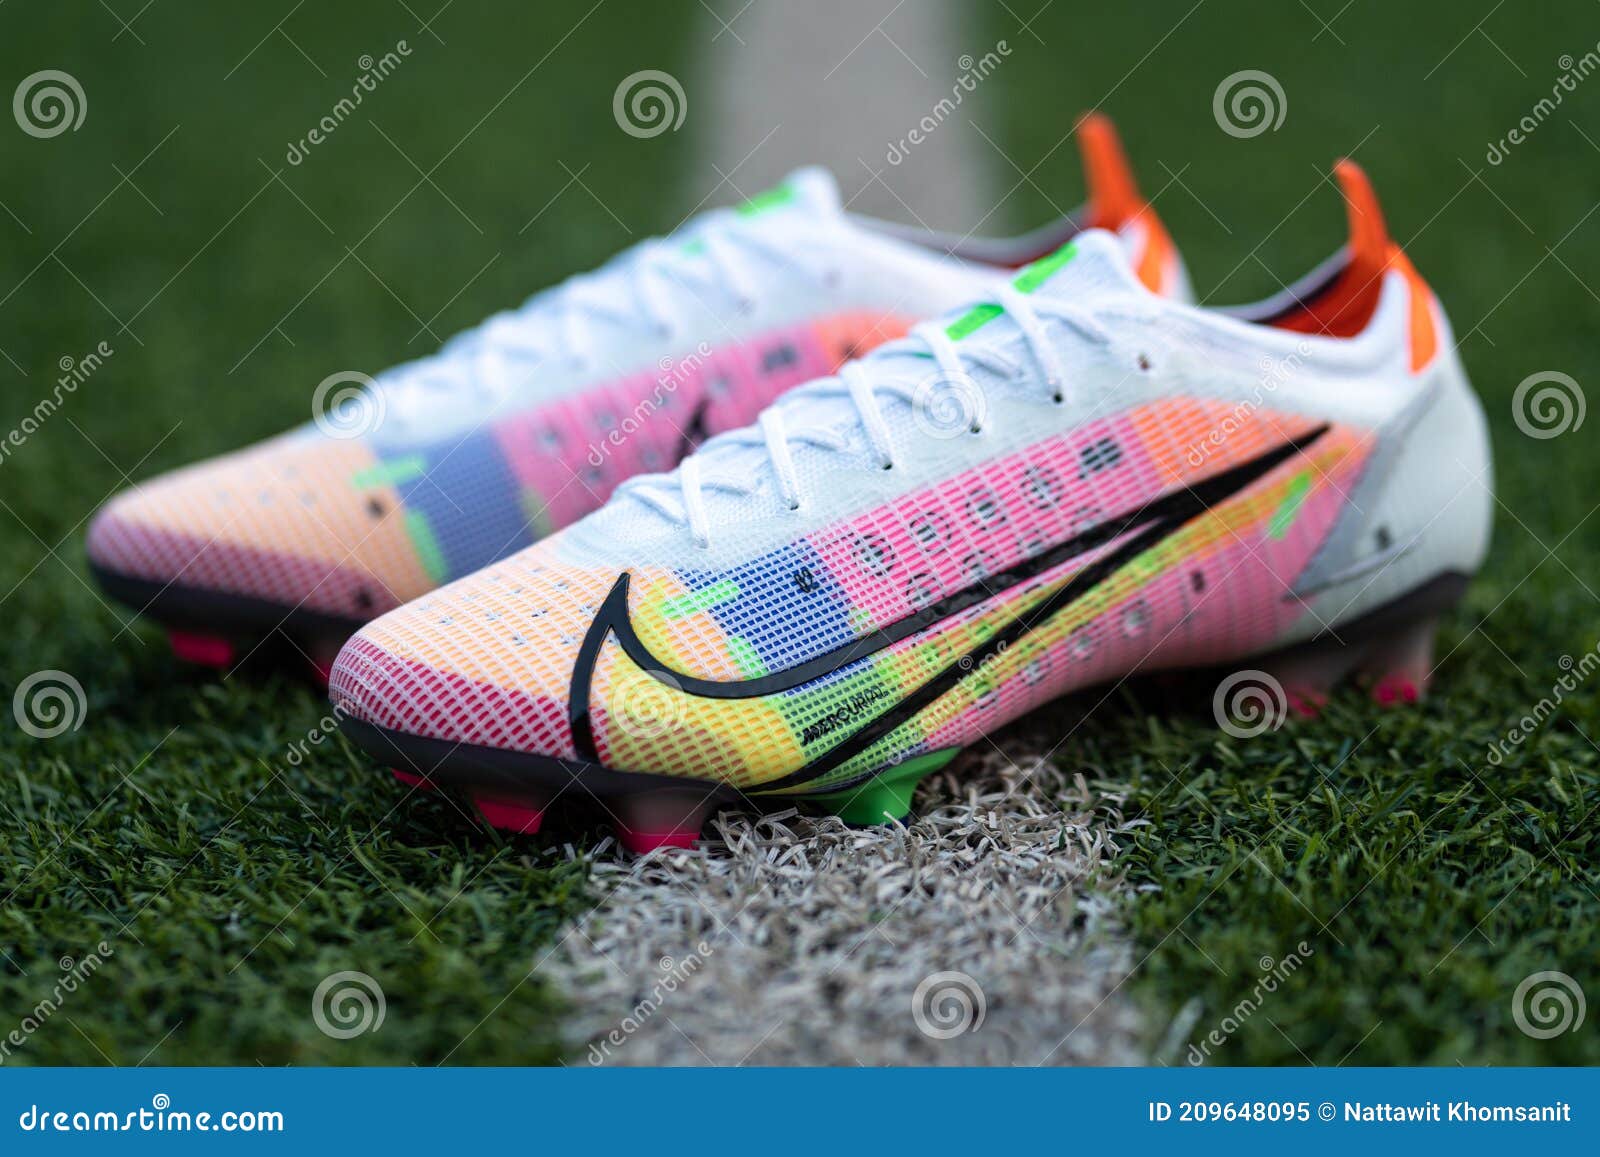 Nike Mercurial Vapor Nuevo Zapato Futbol Nike. Imagen editorial - Imagen de moderno: 209648095